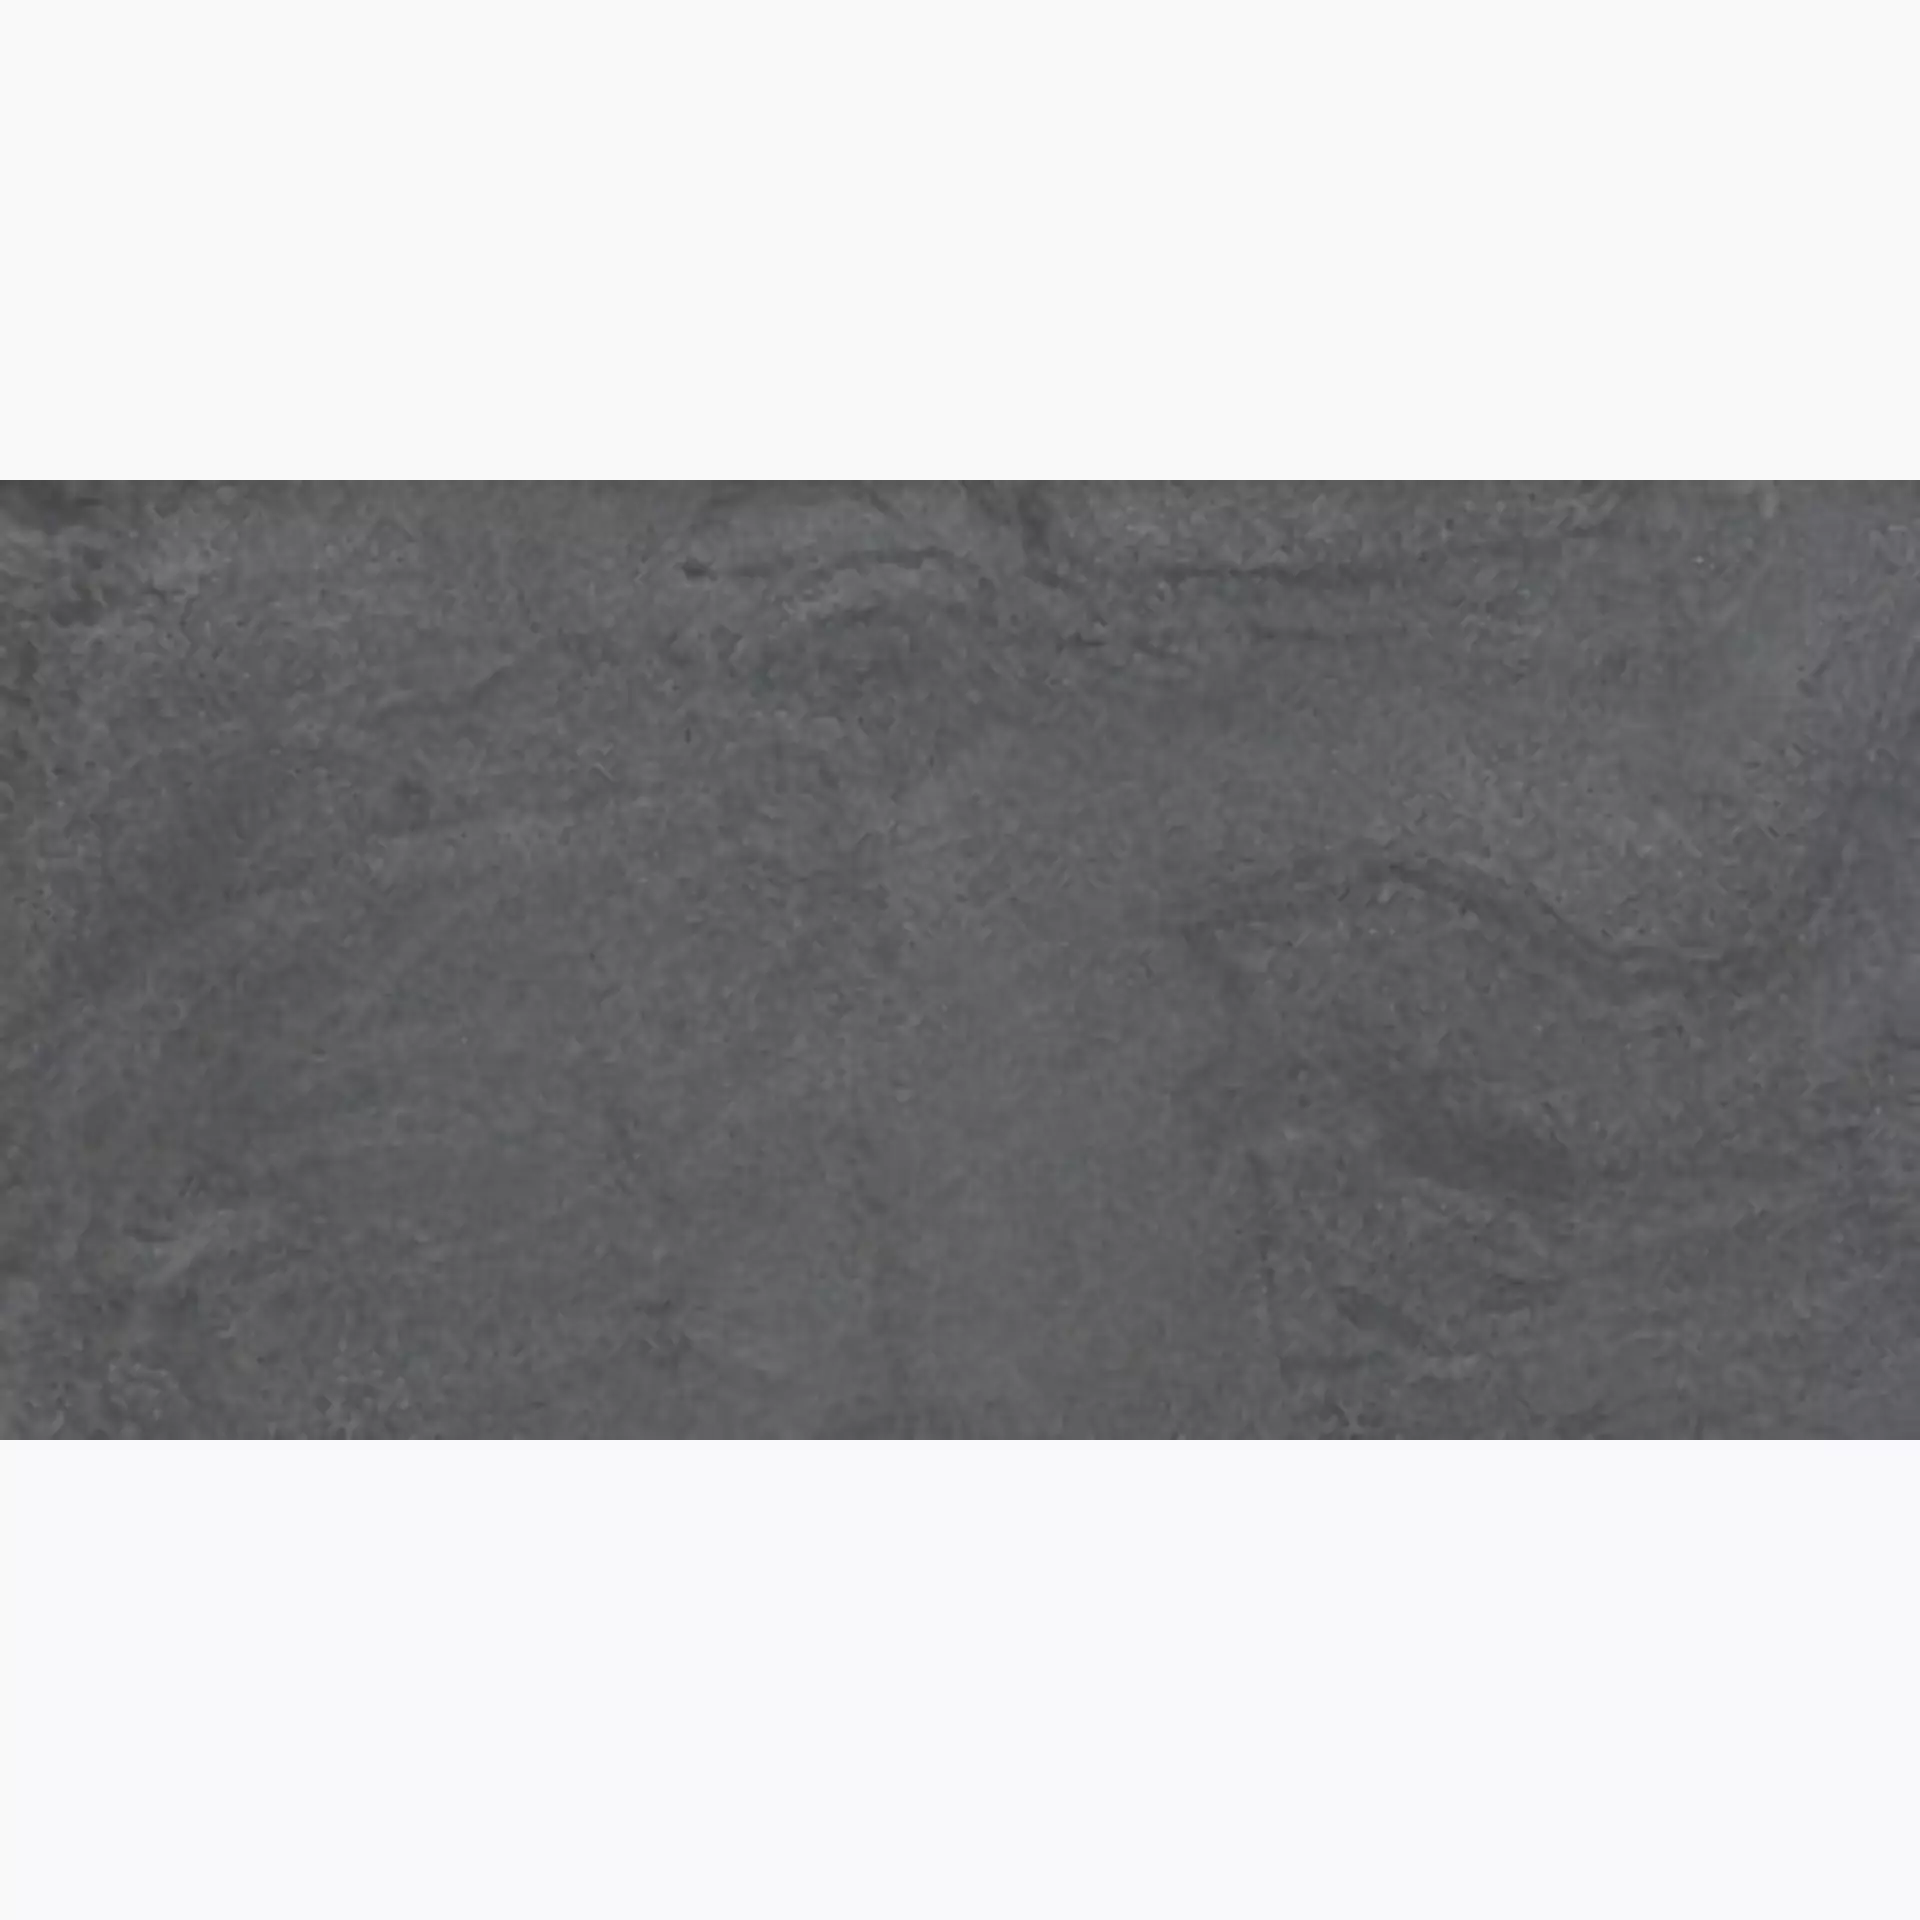 Diesel Diesel Liquid Stone Black Naturale – Matt Copribordo 728876 15x30cm 9mm